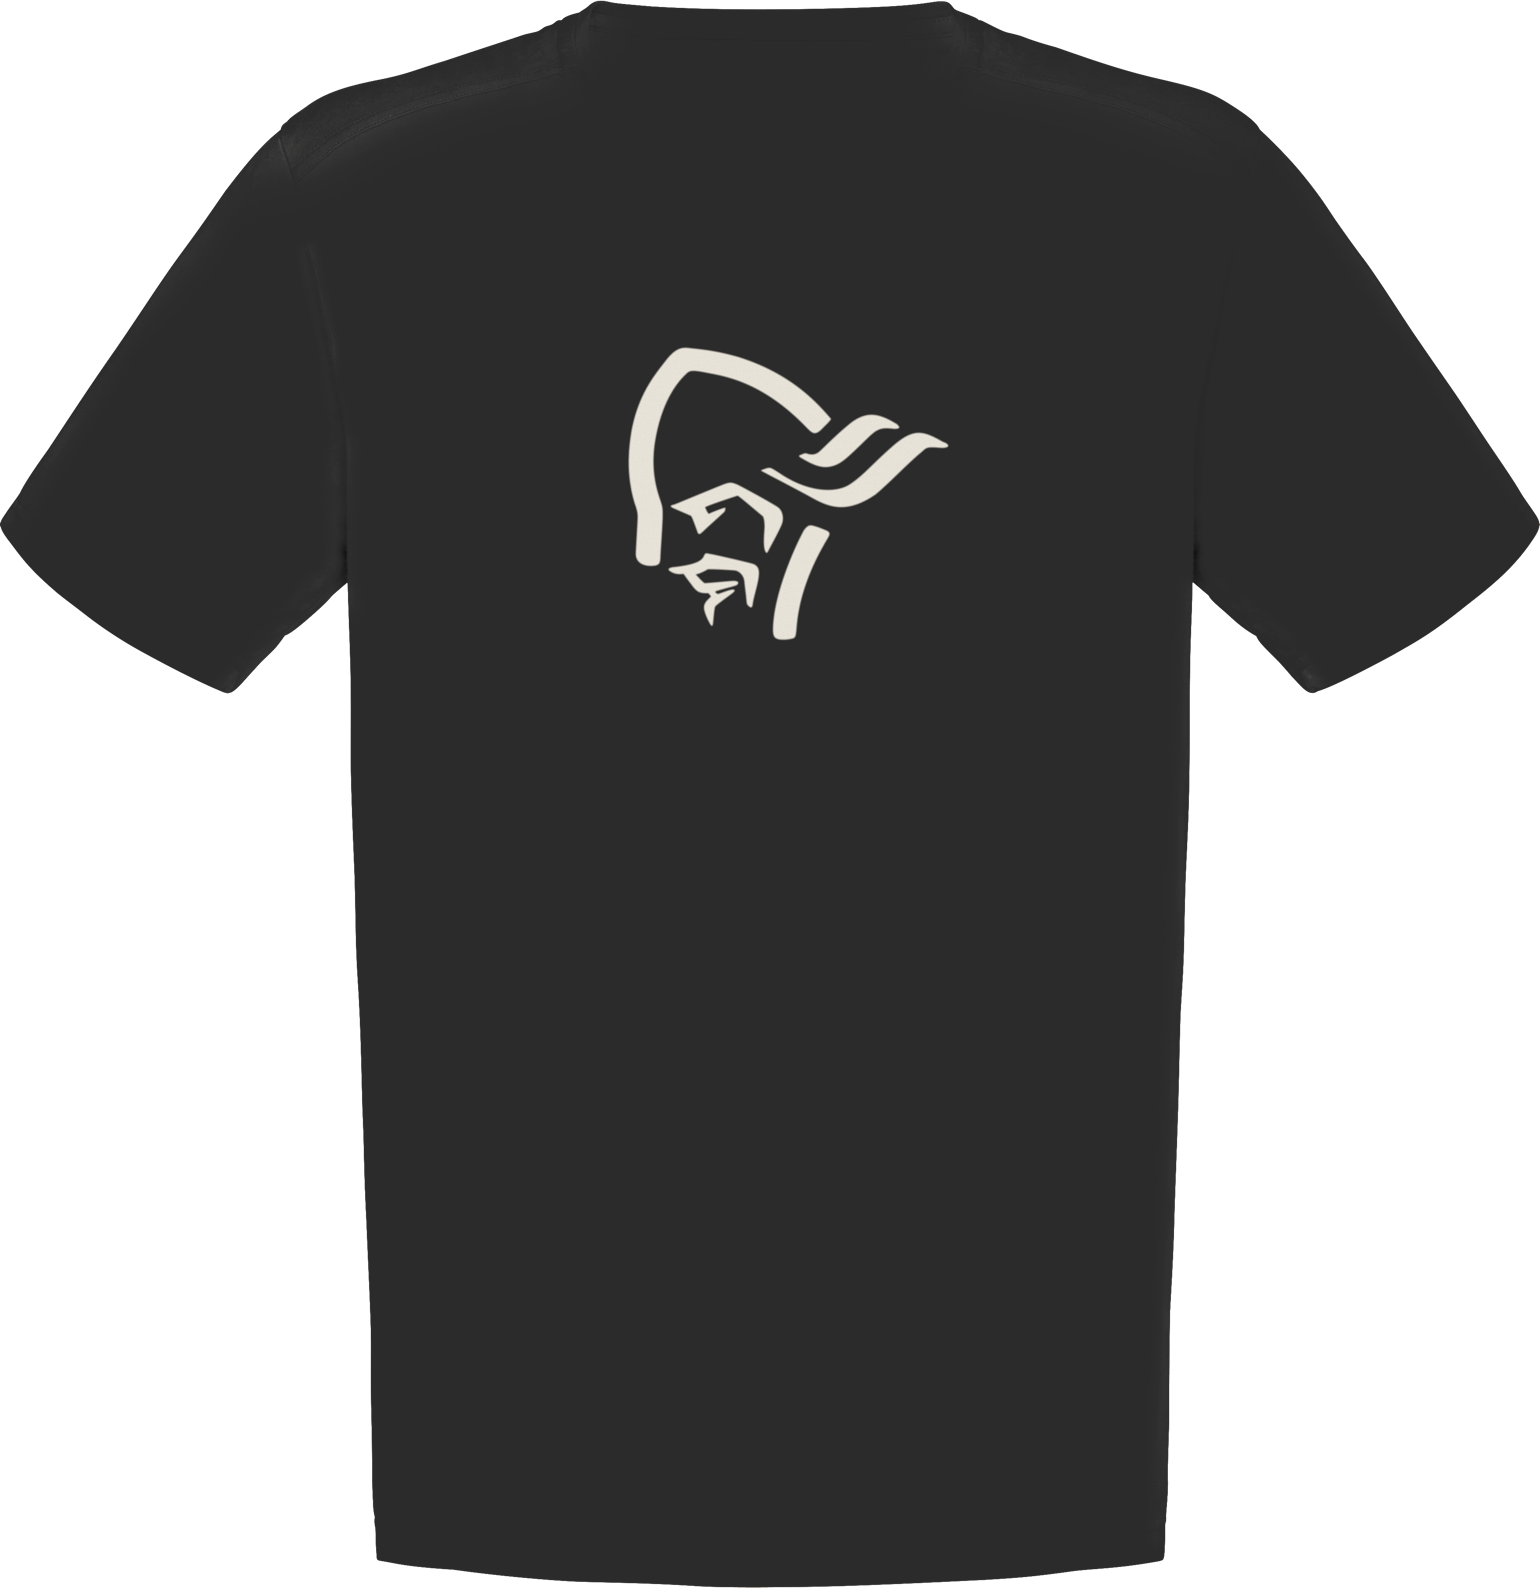 Men's /29 Cotton Viking T-shirt Caviar/Snowdrop